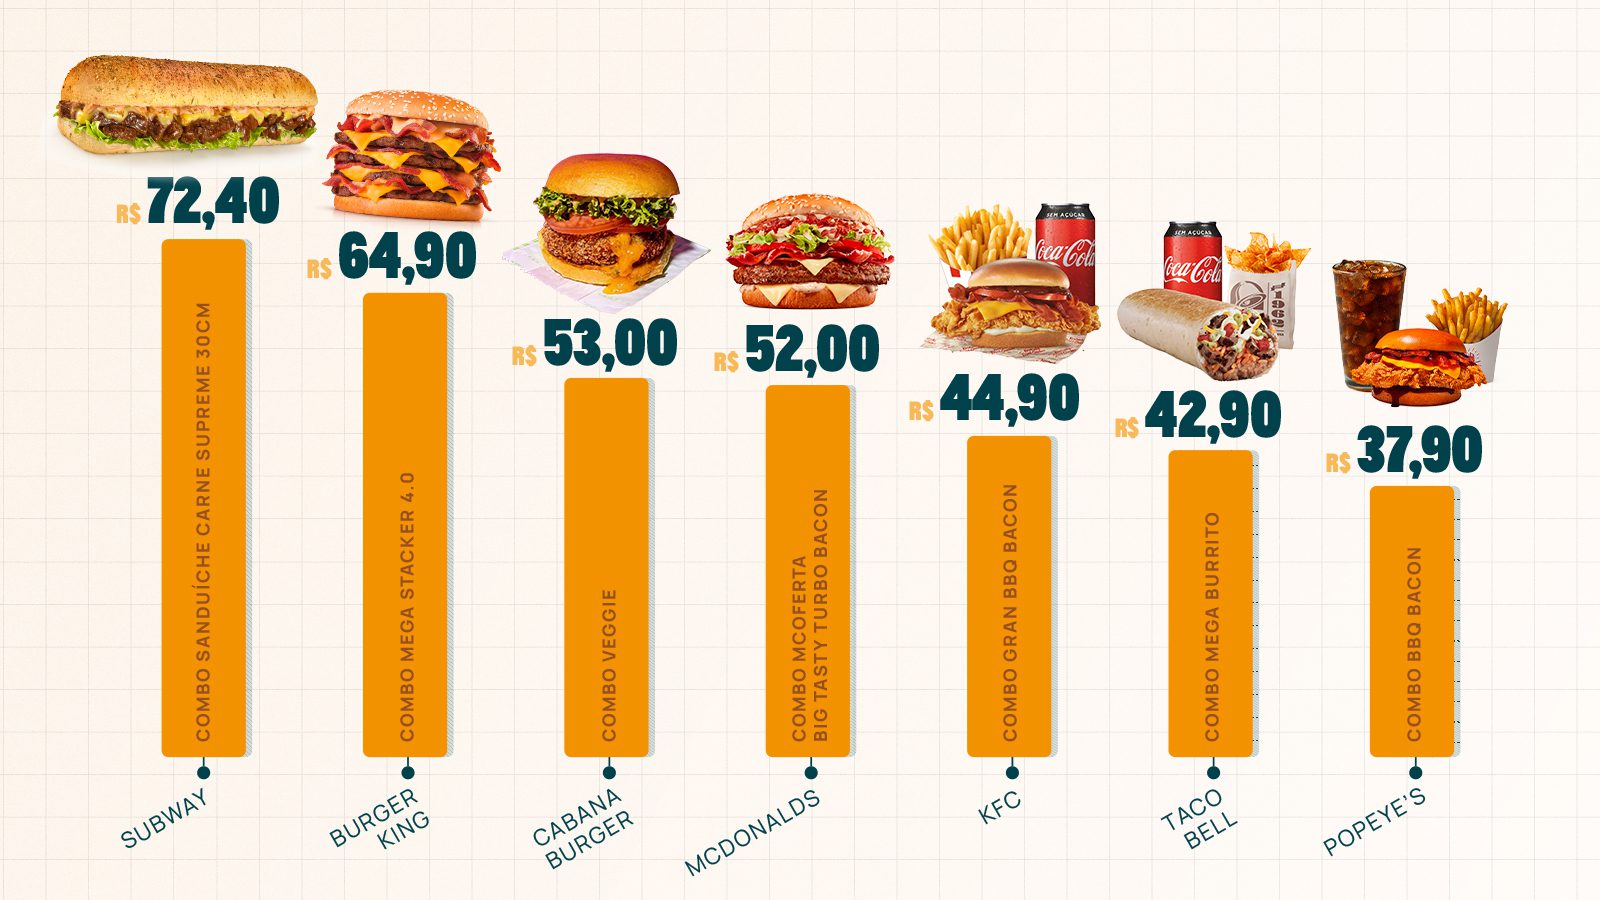 Gráfico traz preços dos combos de lanches mais caros em redes de fast food no Brasil. Subway: Combo Sanduíche Carne Supreme 30cm - R$72,40 McDonalds: Combo McOferta Big Tasty Turbo Bacon - R$ 52,00 KFC: Combo Gran Barbecue Bacon - R$44,90 Burger King: Combo Mega Stacker 4.0 - R$ 64,90 Popeyes: Combo Barbecue Bacon - R$ 37,90 Cabana Burguer: Combo Veggie - R$ 53,00 Taco Bell: Combo Mega Burrito - R$ 42,90